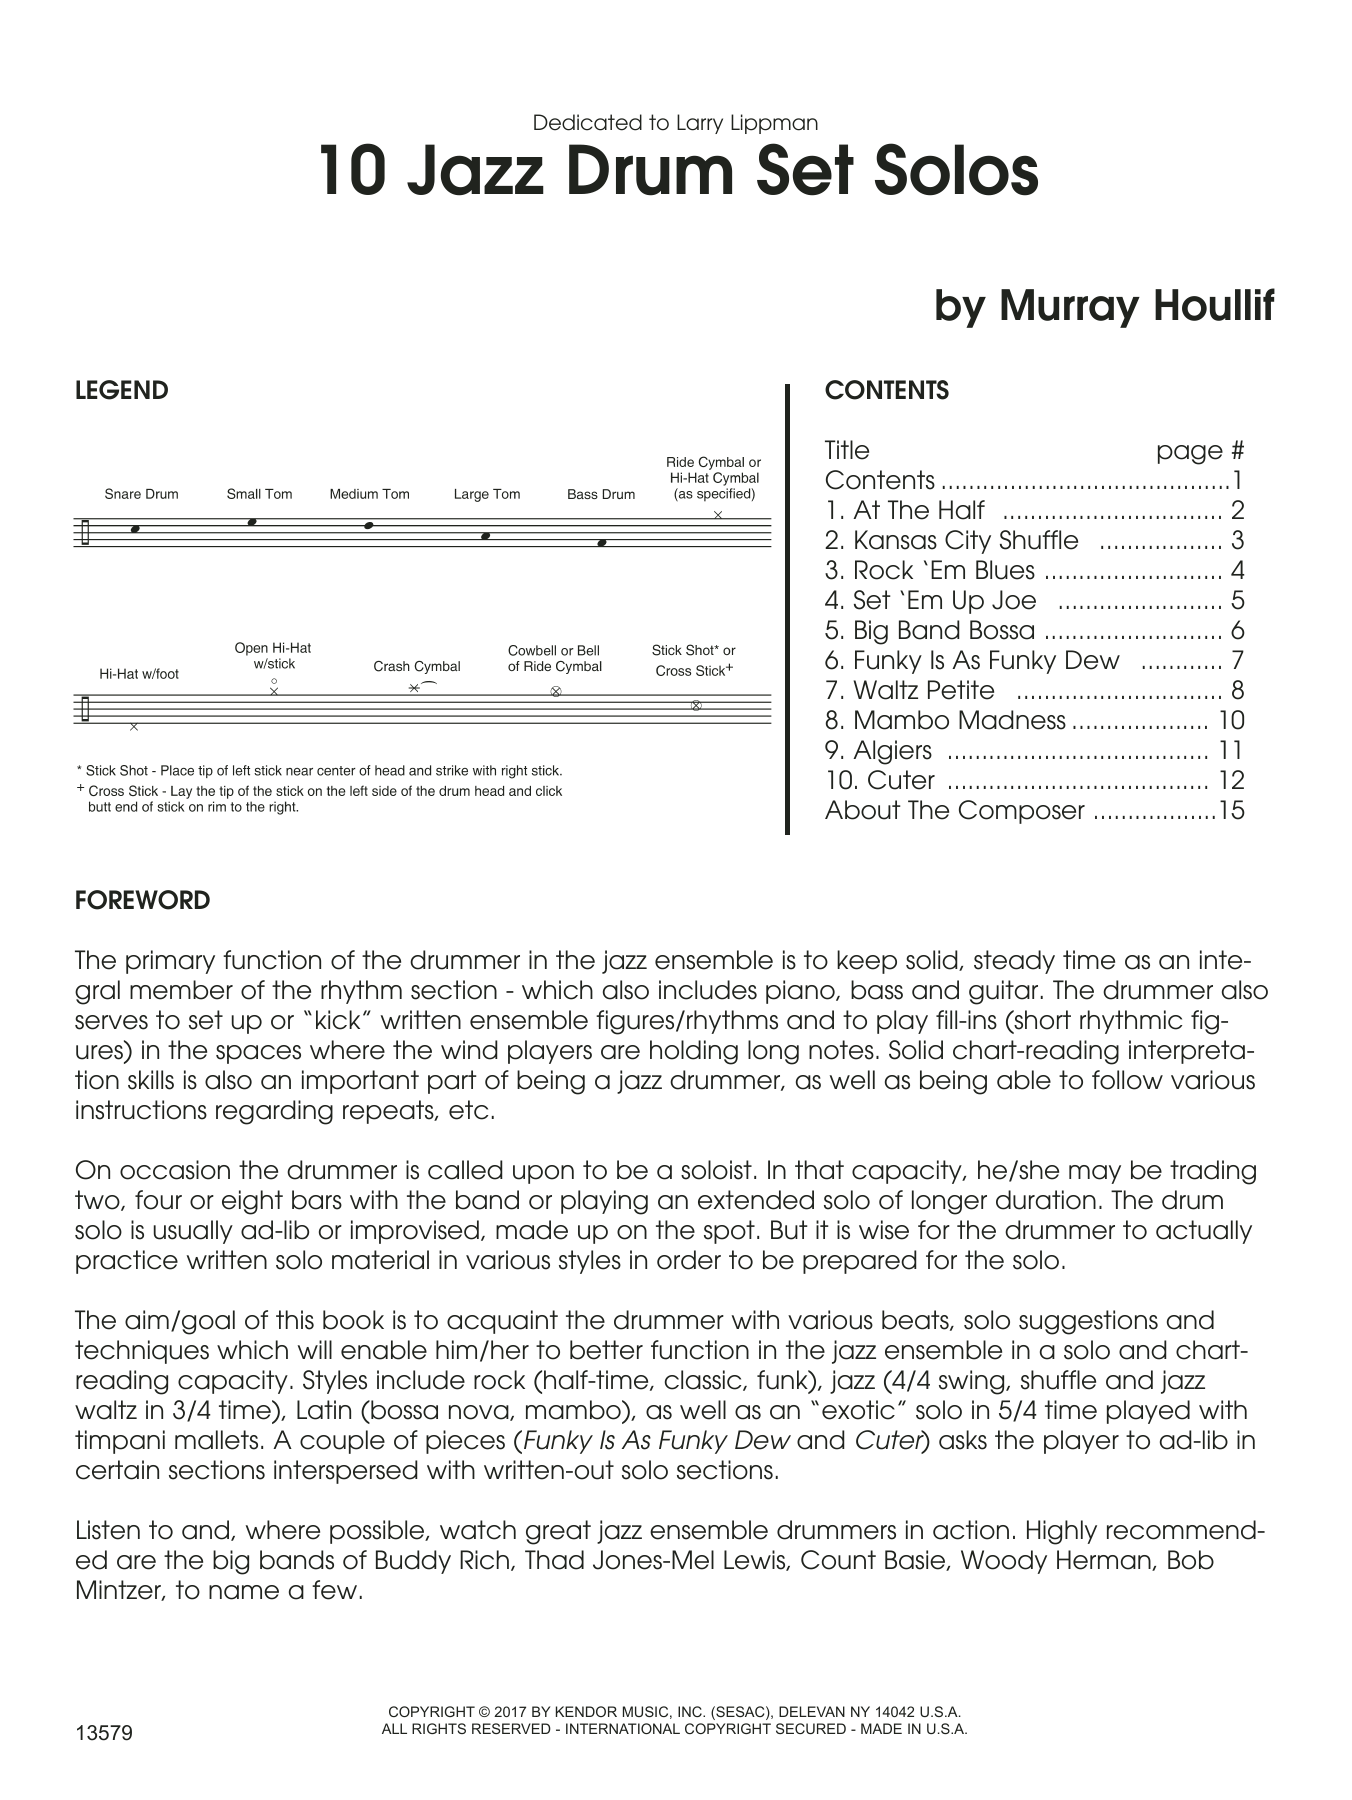 Download Murray Houllif 10 Jazz Drum Set Solos Sheet Music